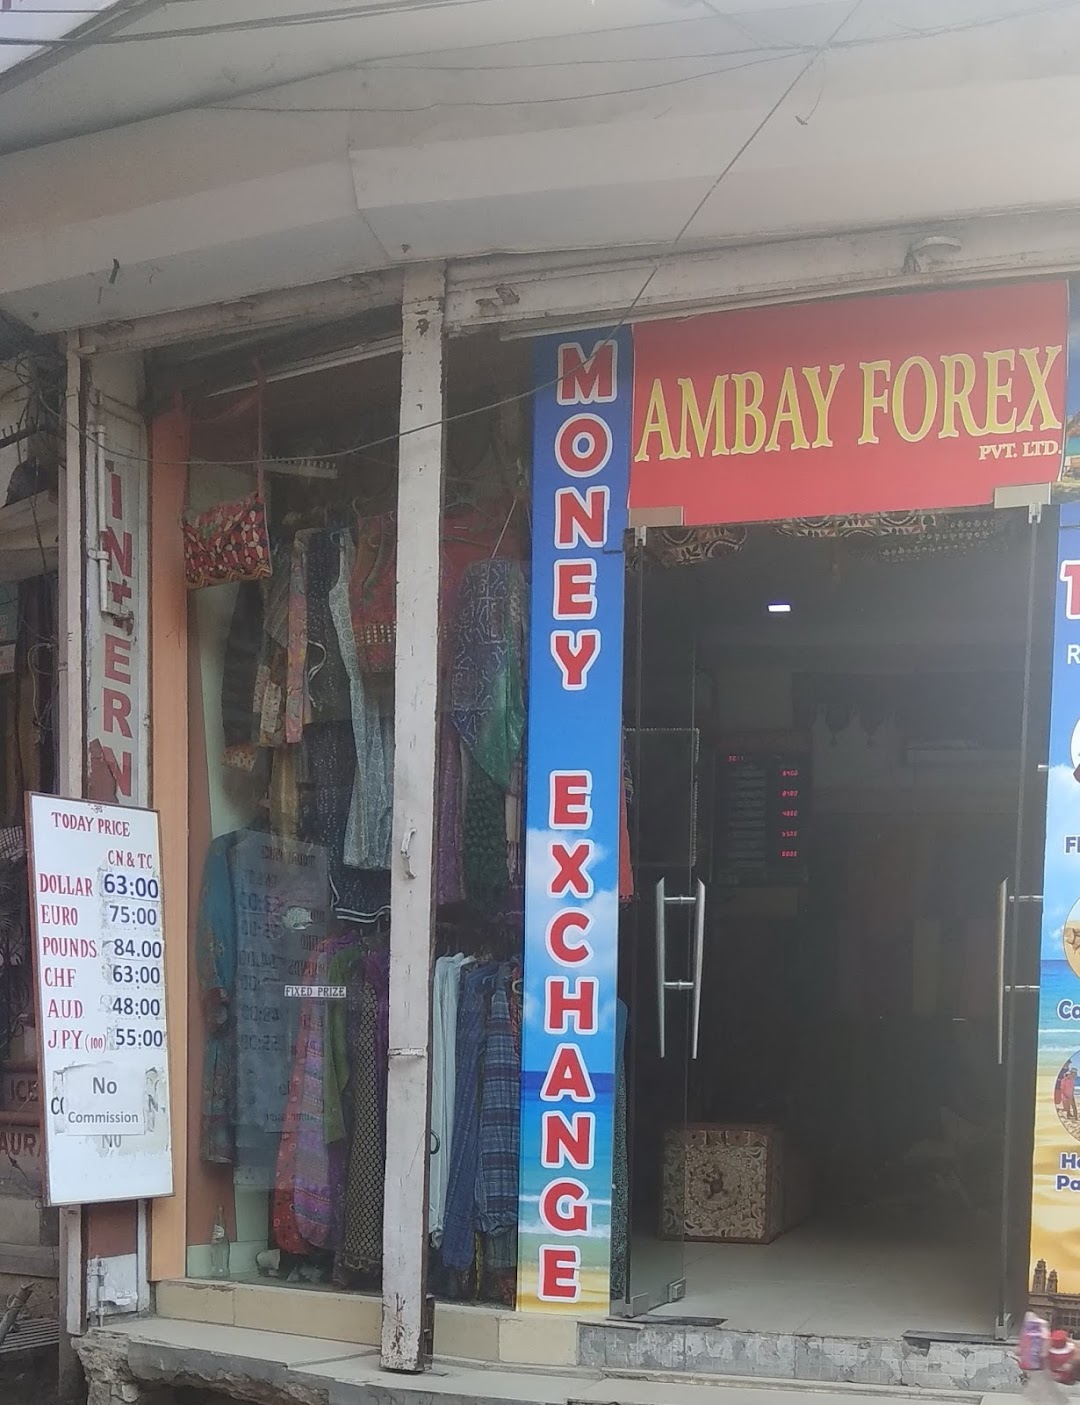 AMBAY FOREX PVT LTD